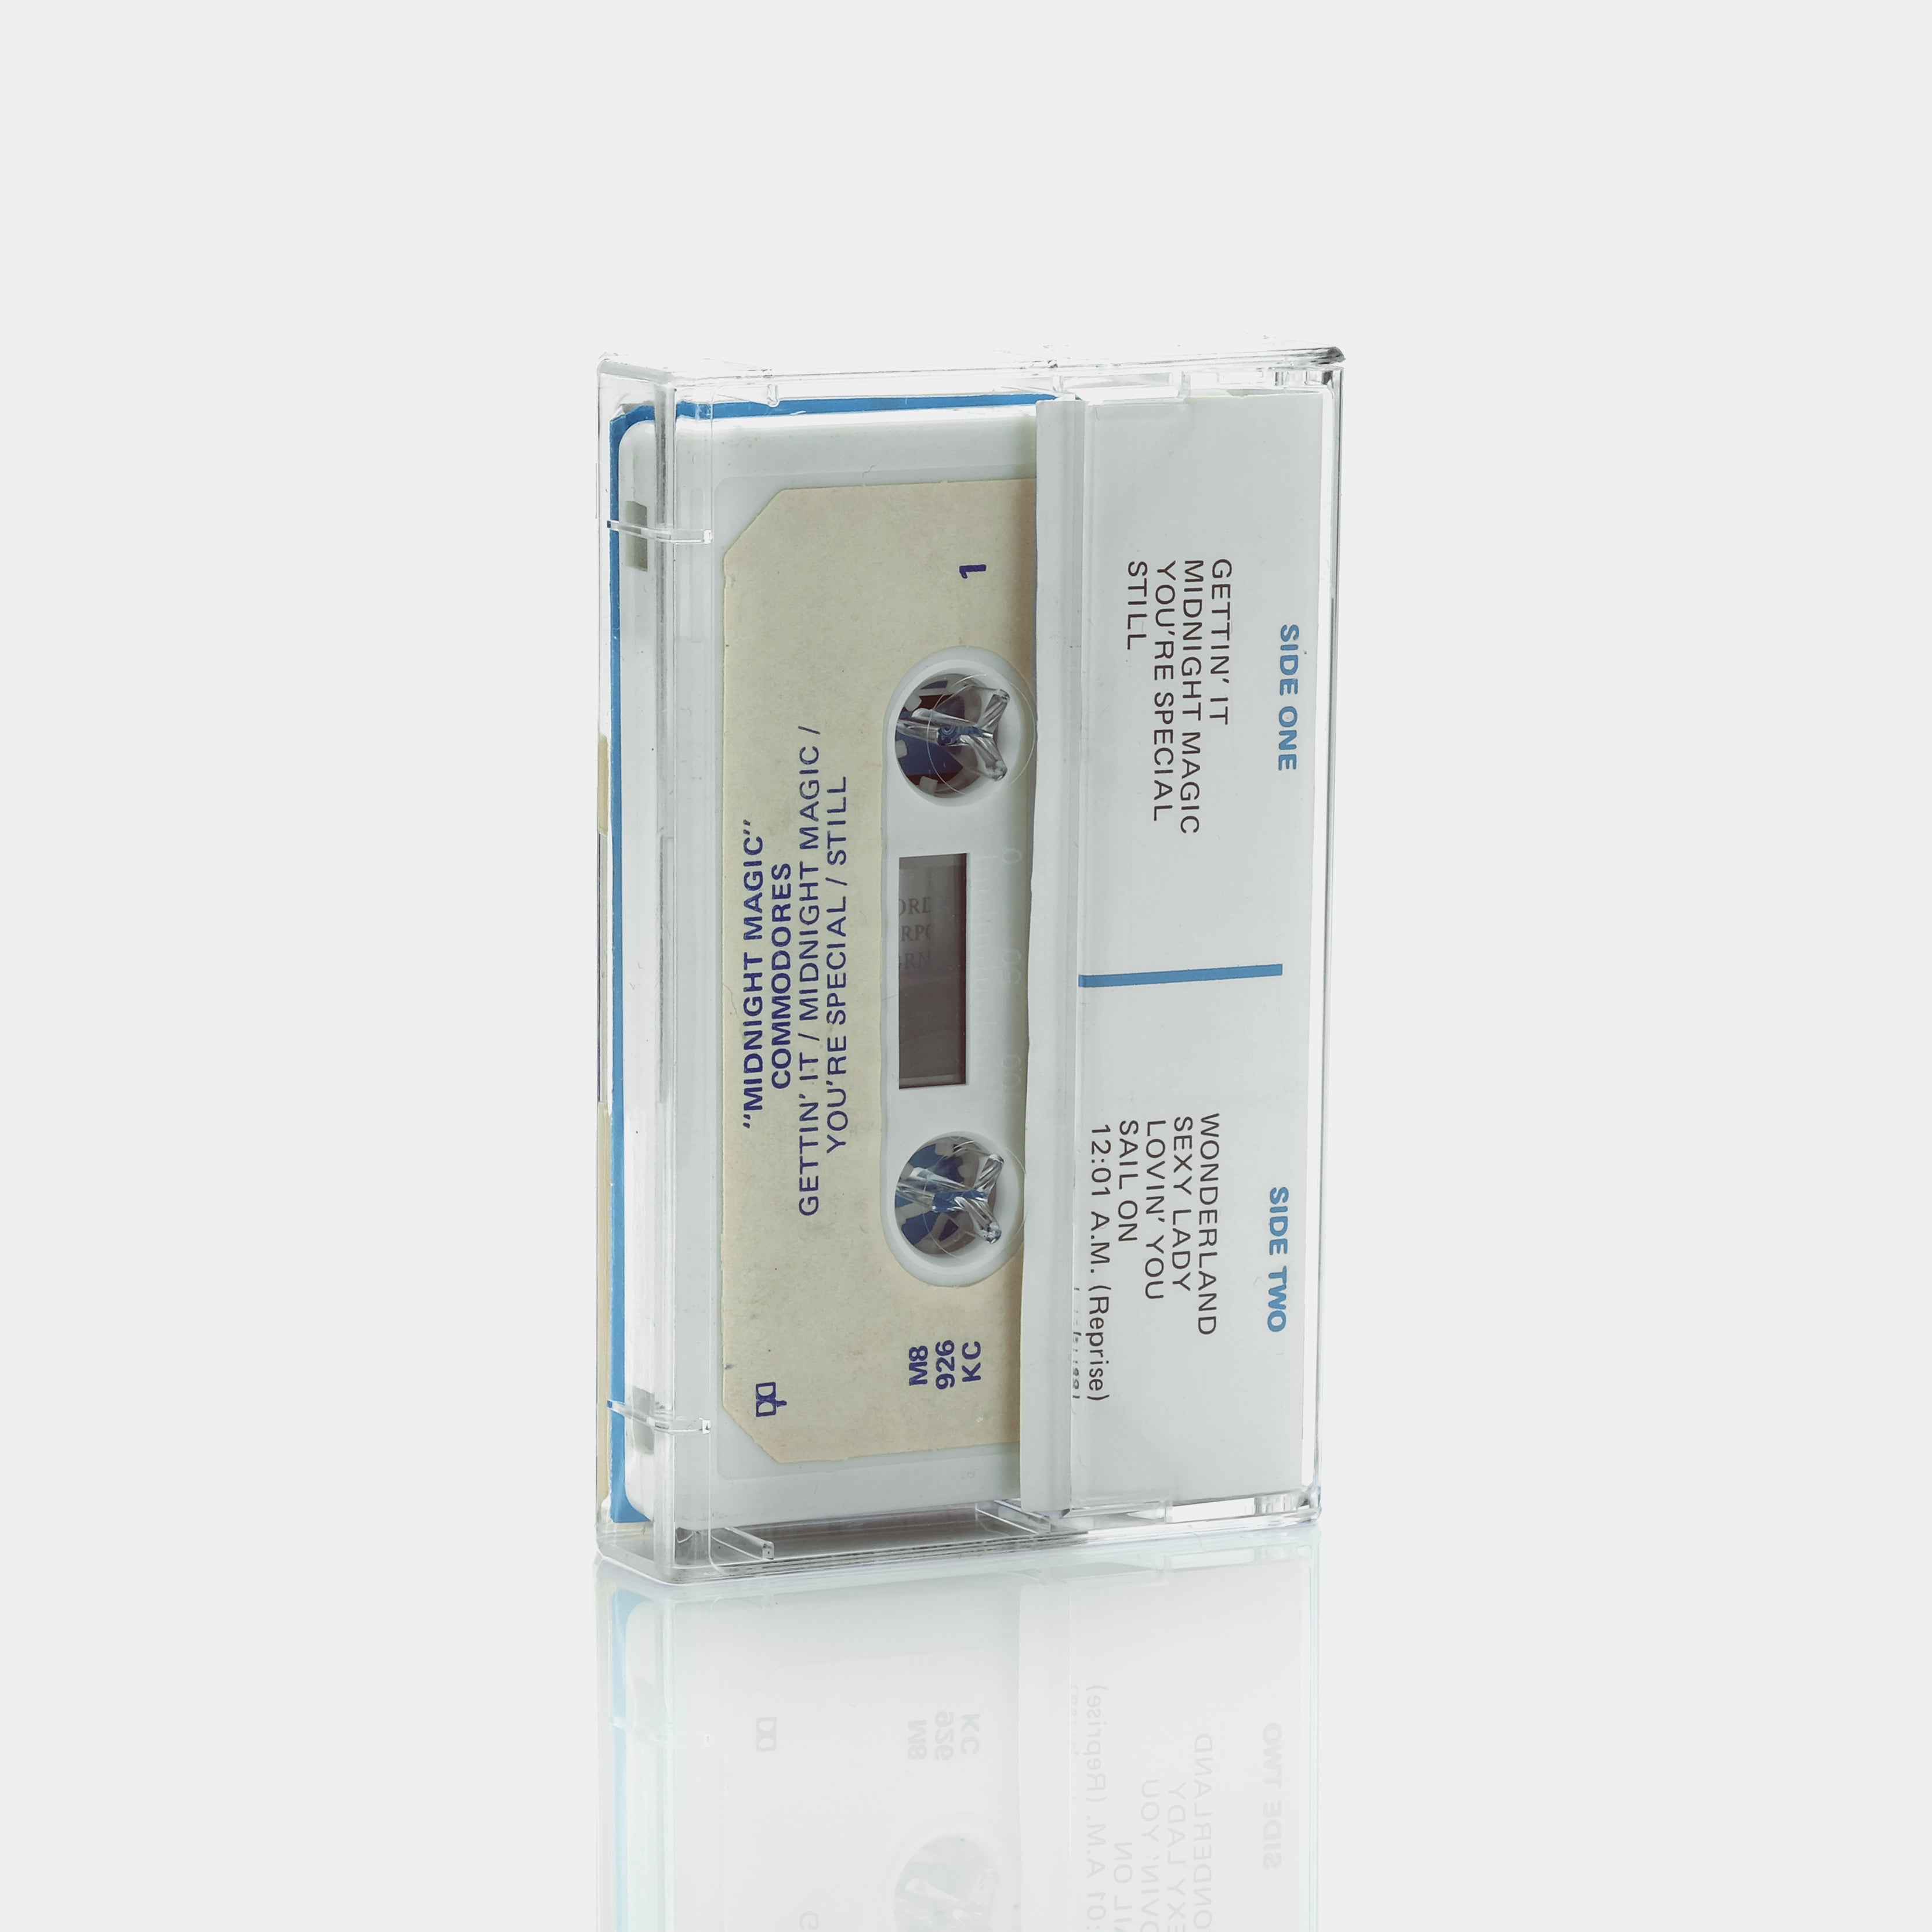 Commodores - Midnight Magic Cassette Tape